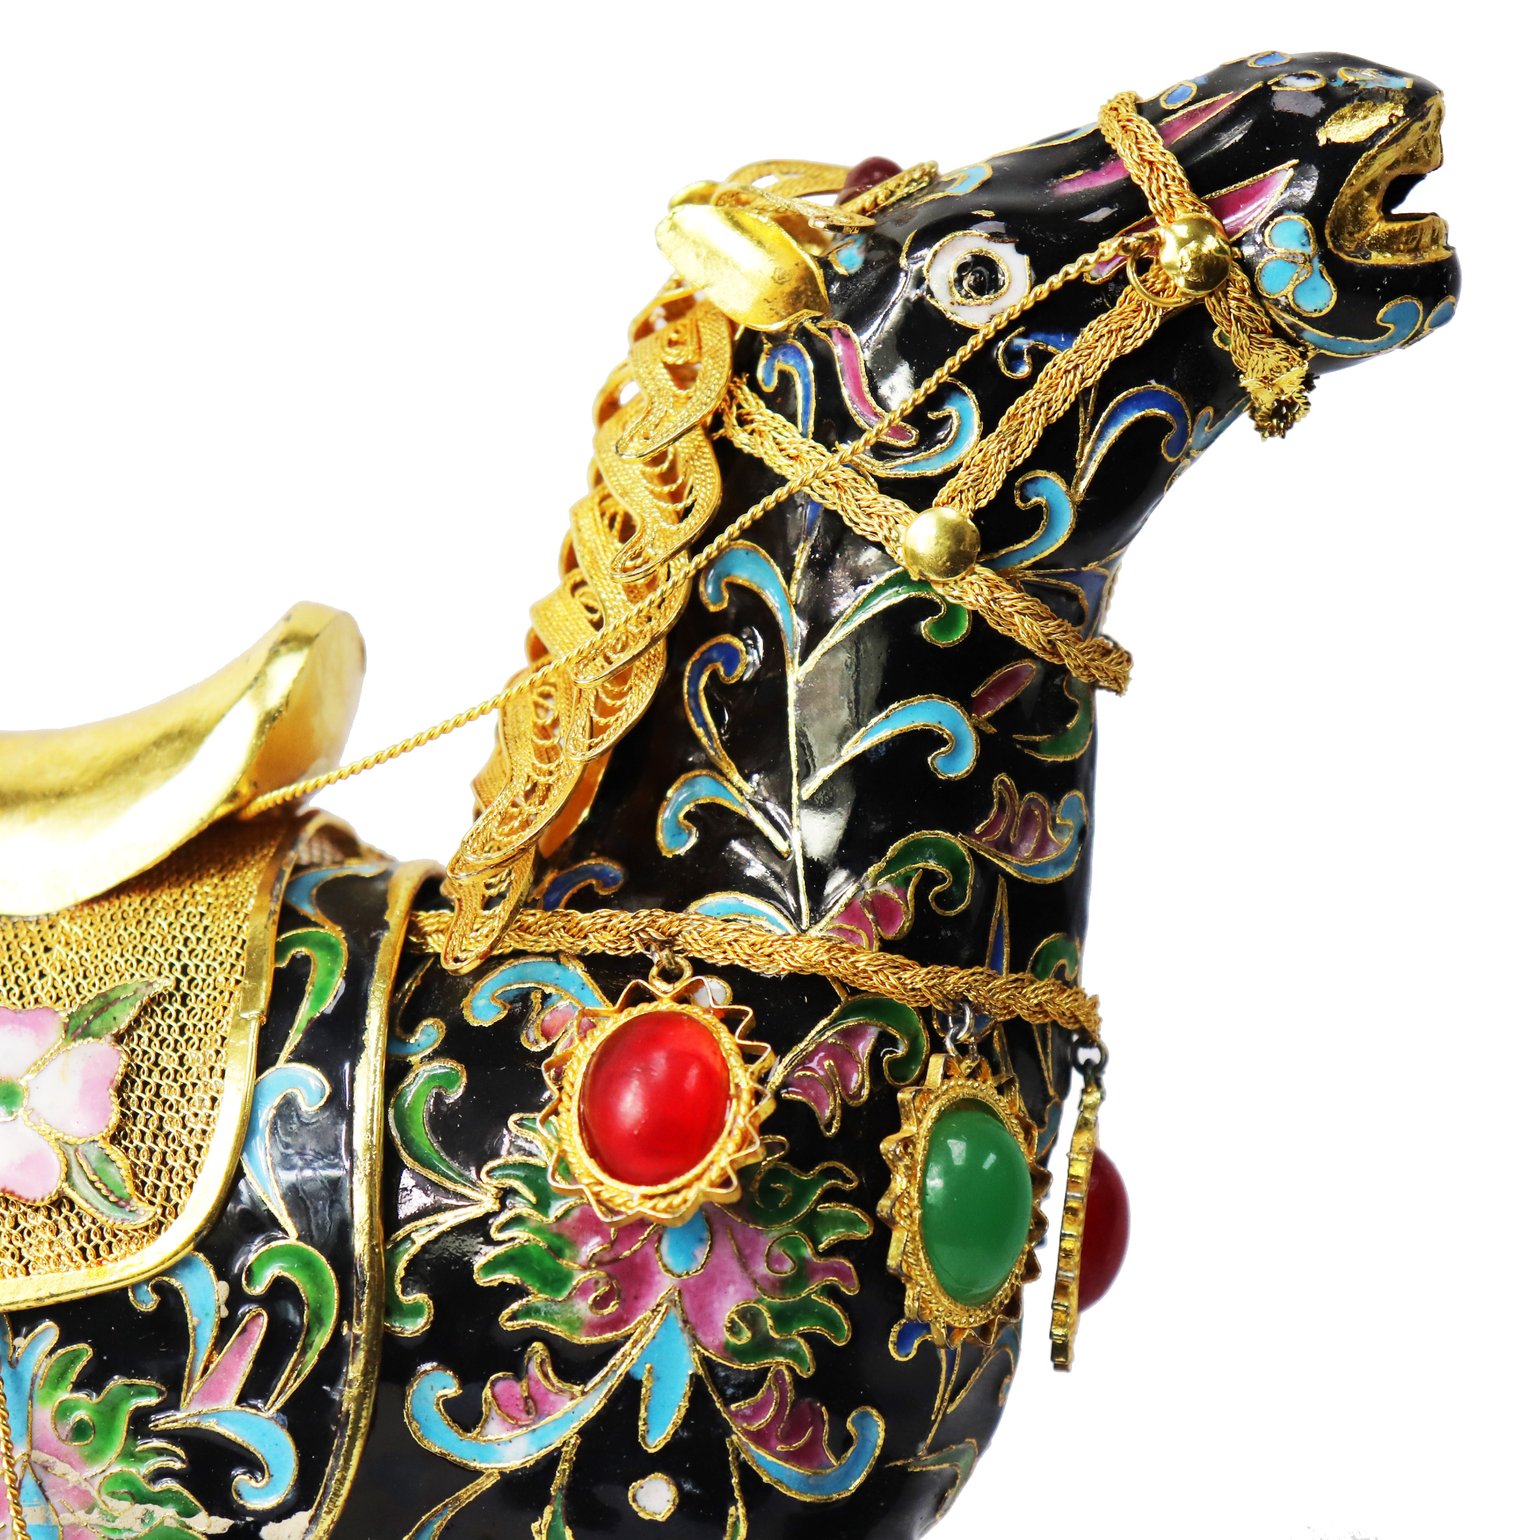 Vintage Chinese Cloisonné Horse Figure with Gems: Black | Baum Galleries